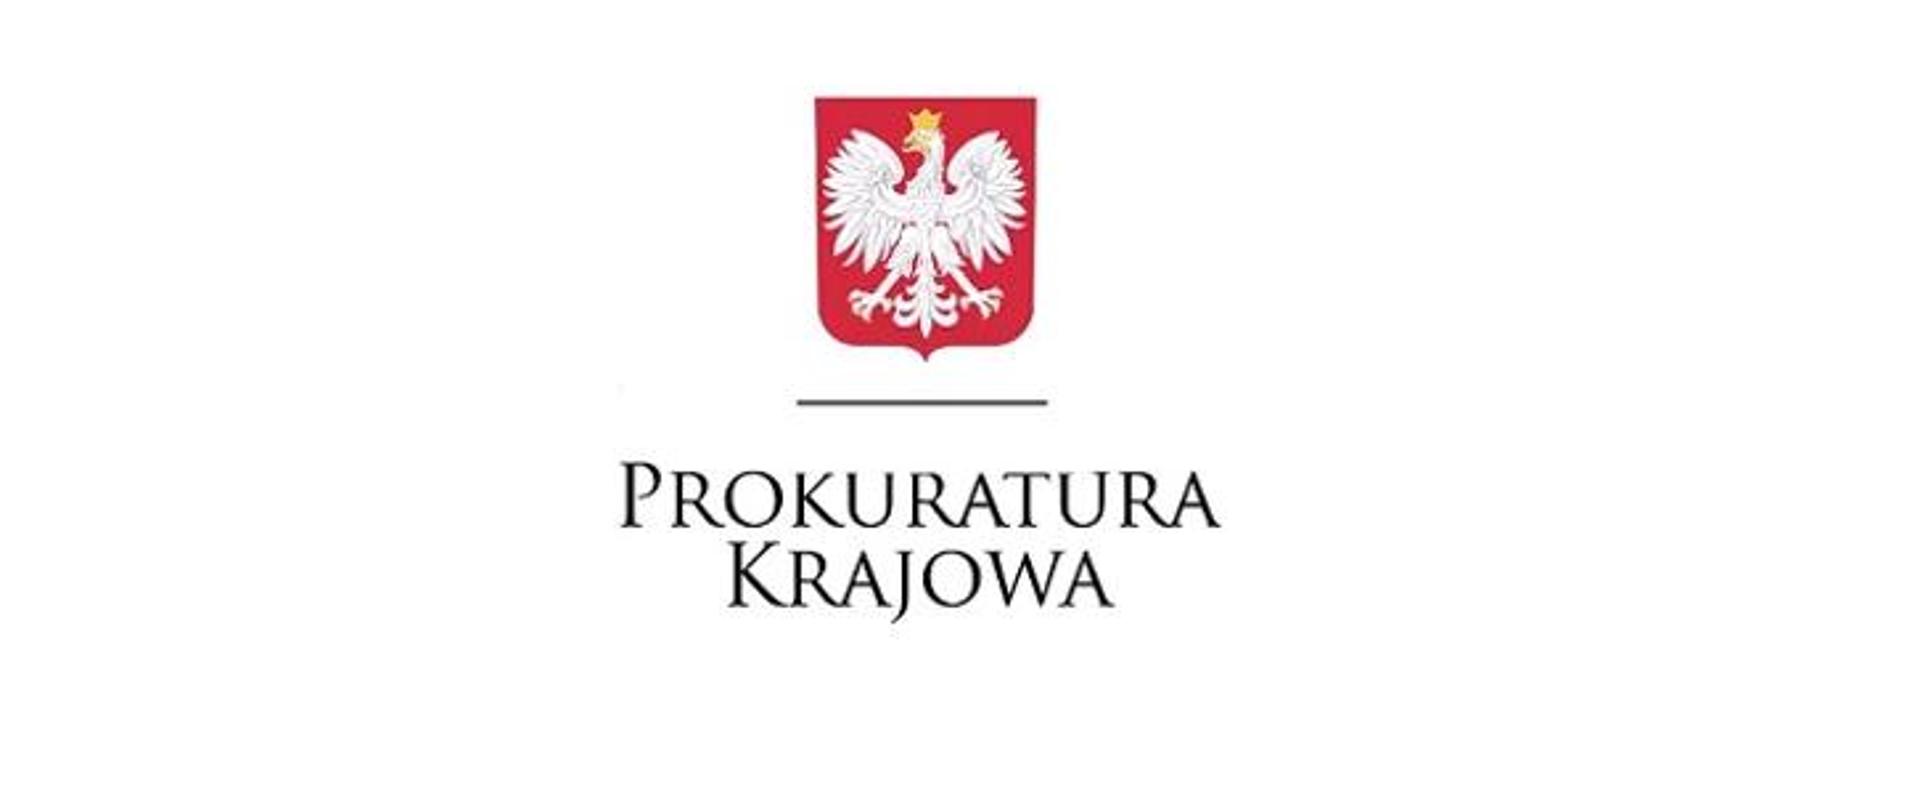 napis Prokuratura Krajowa oraz godło polski nad napisem